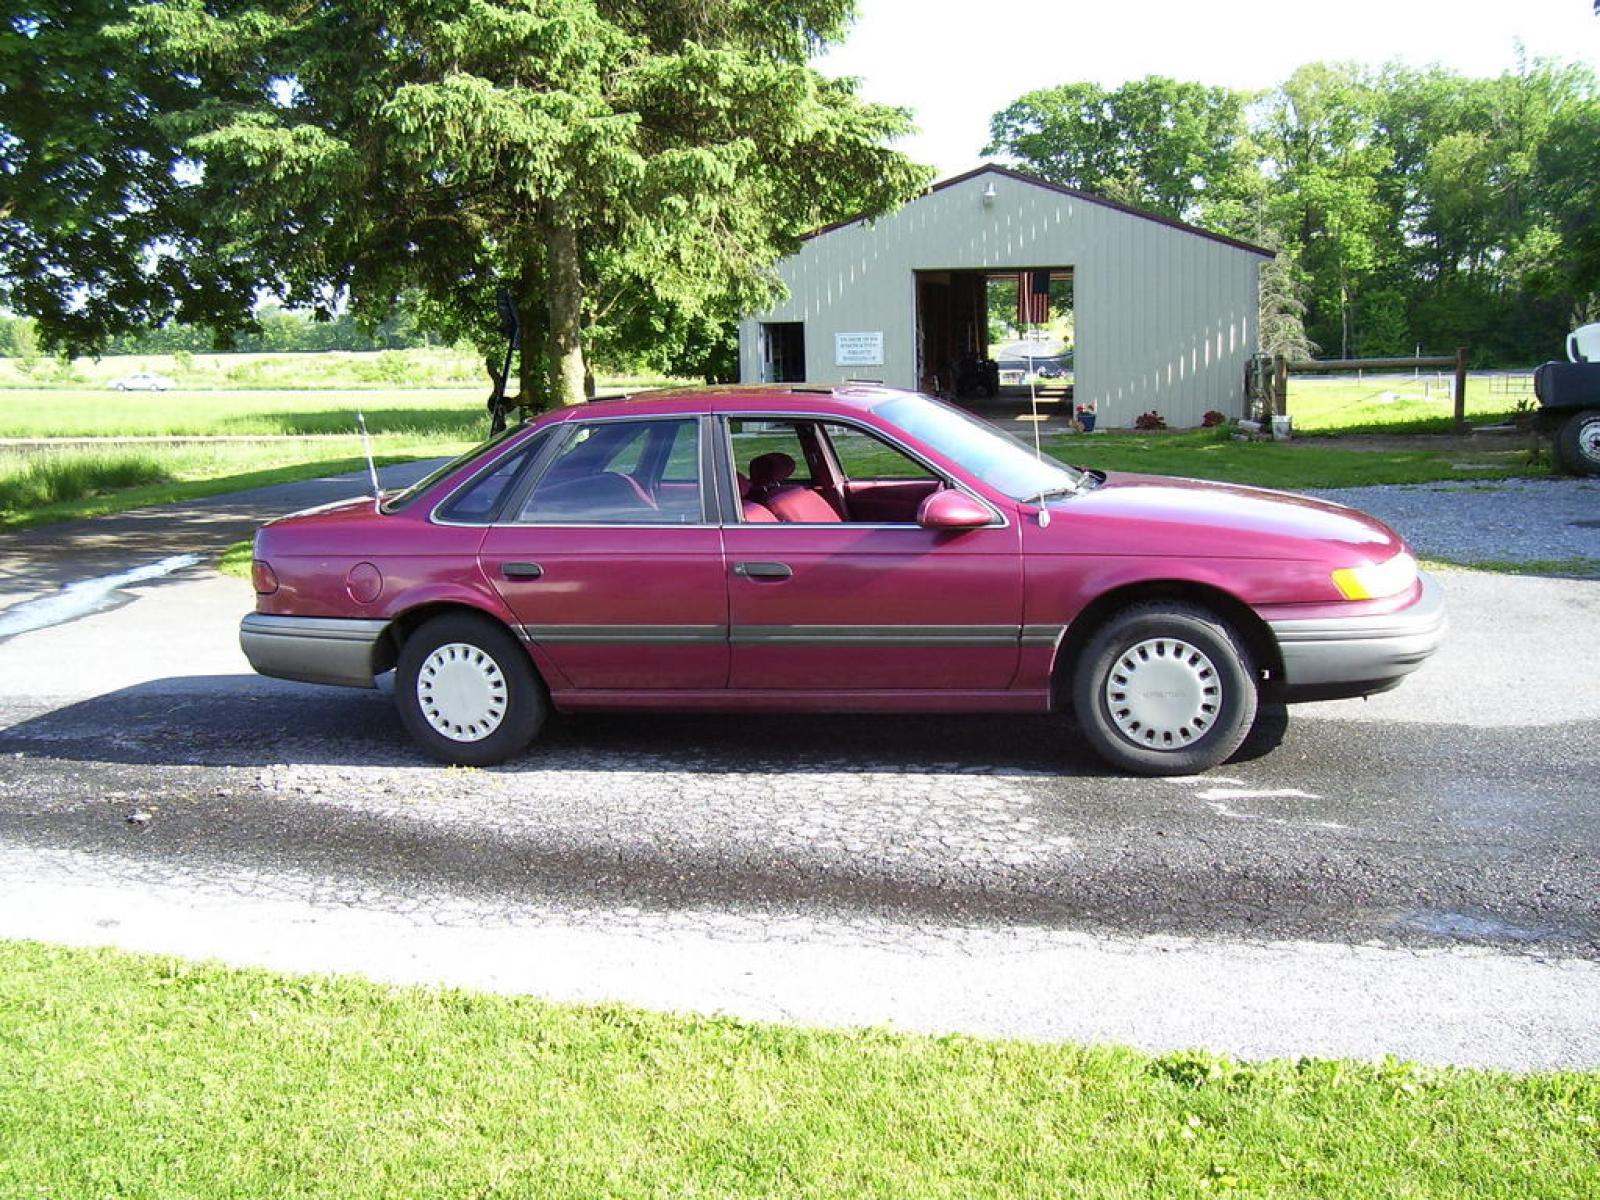 Купить форд таурус. Ford Taurus 1992. Форд Таурус 1992. Форд Таурус 92. Ford Taurus 1992 универсал.